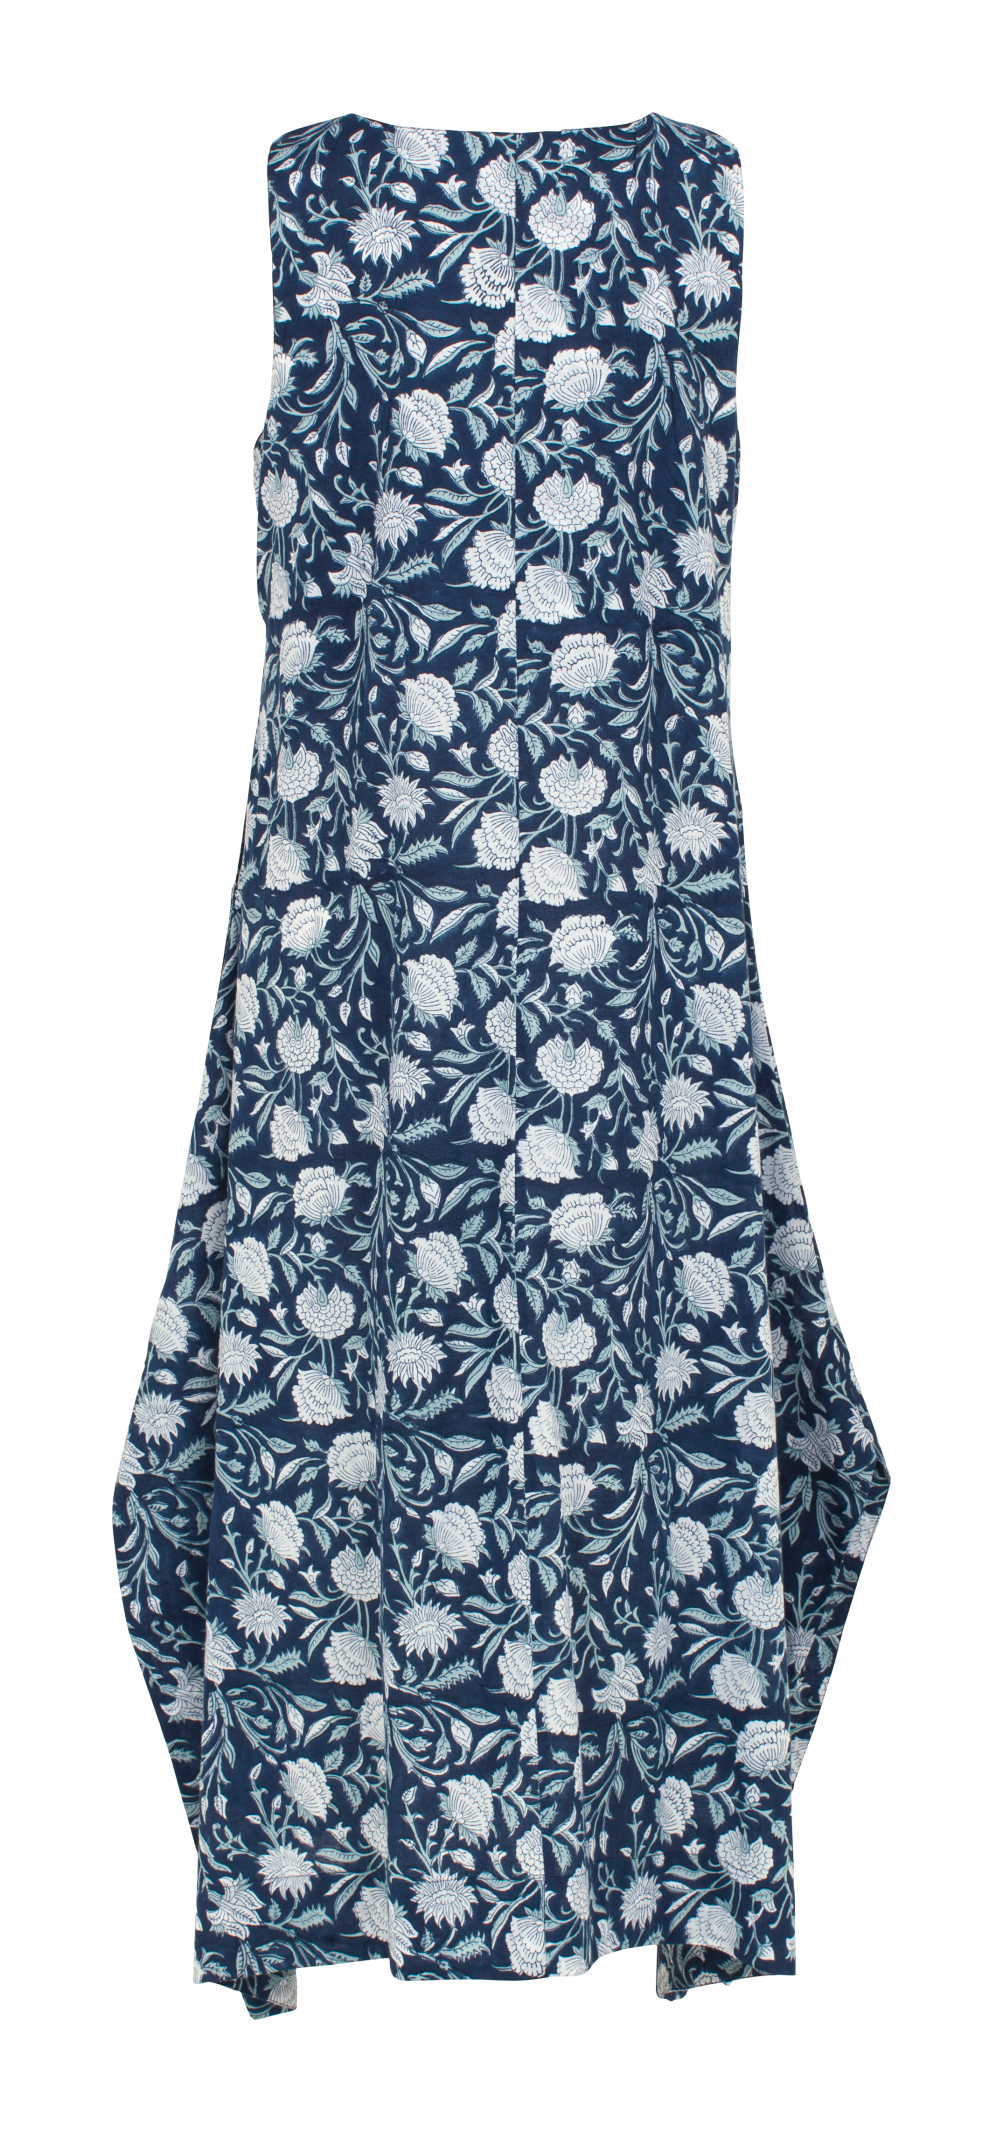 A-line Dress in Navy Blue